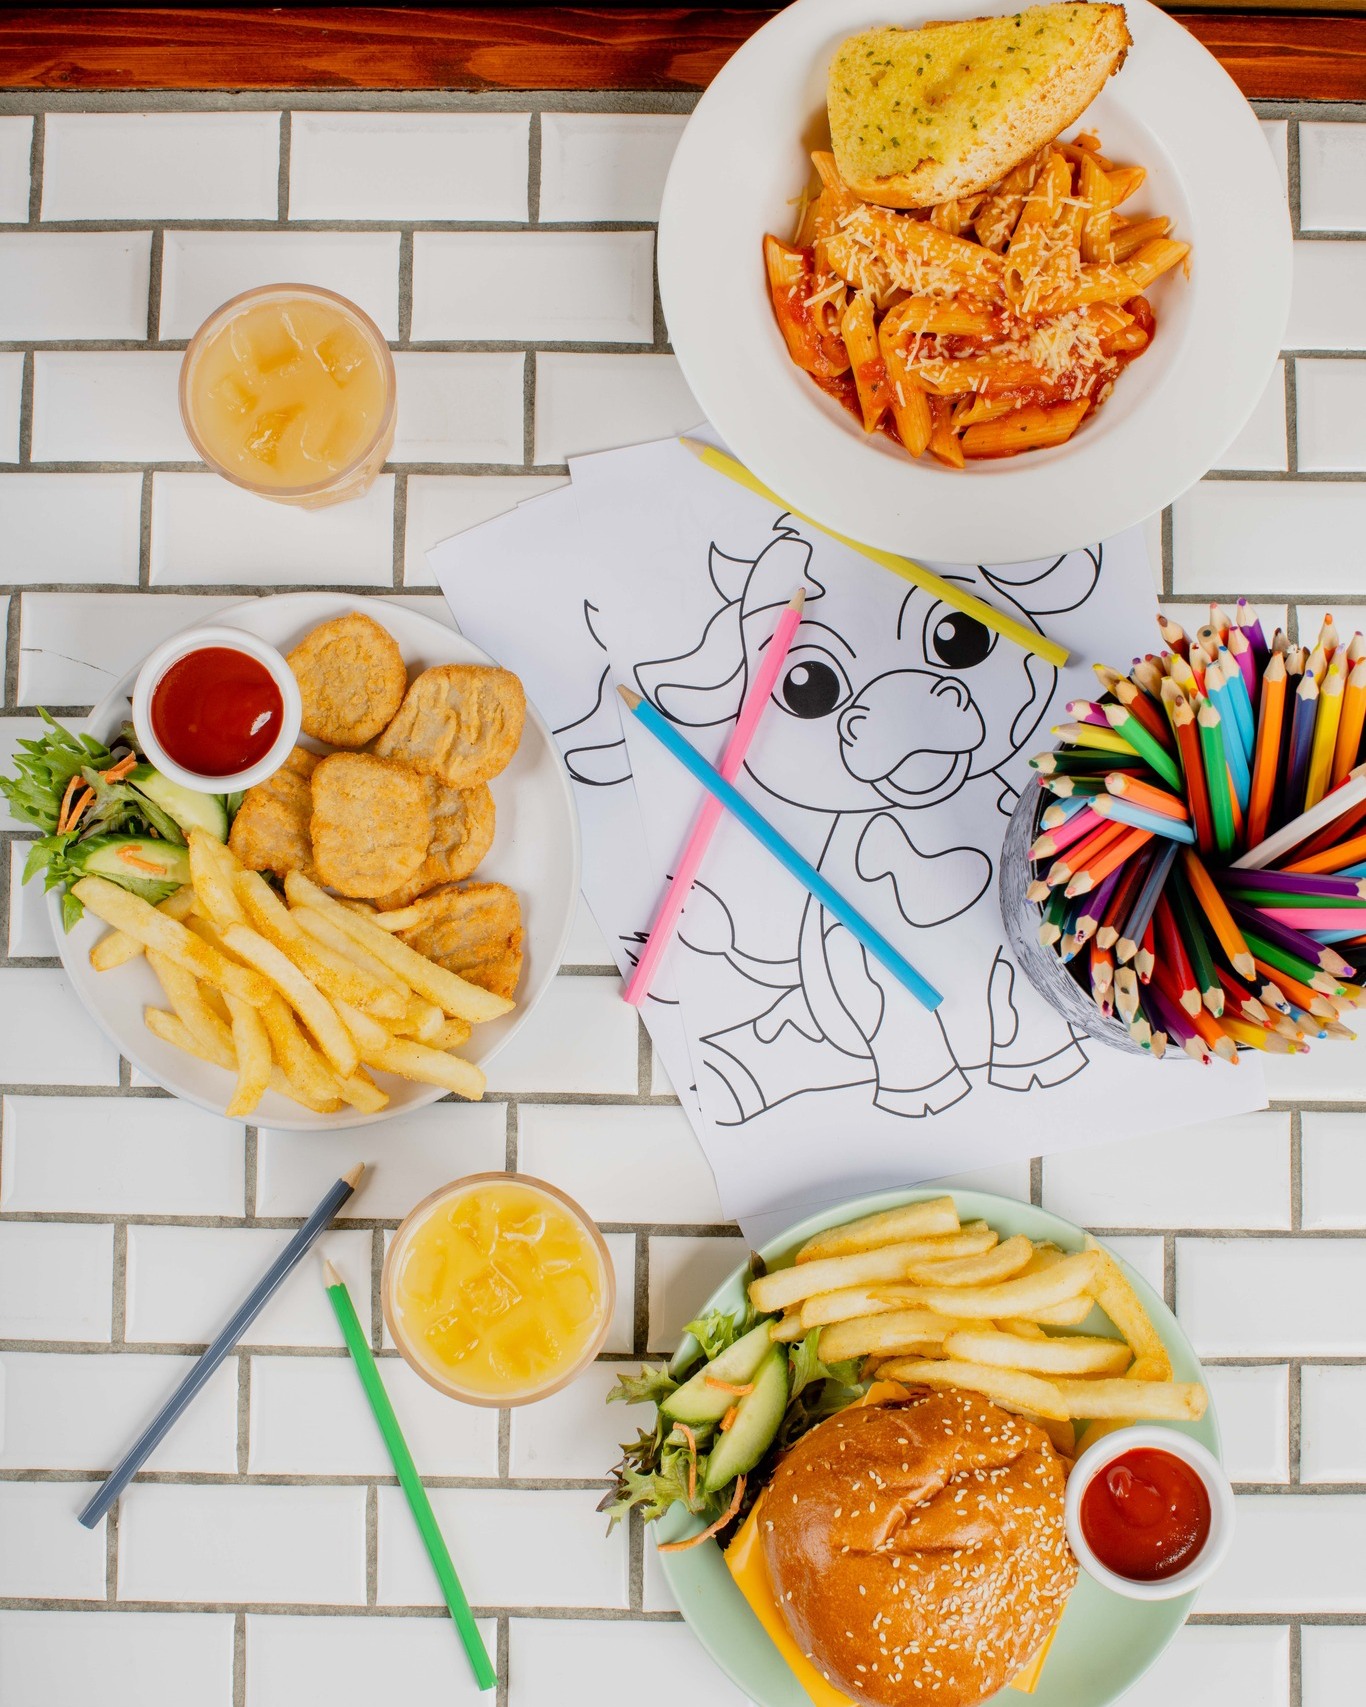 20+ Adelaide venues where kids eat free